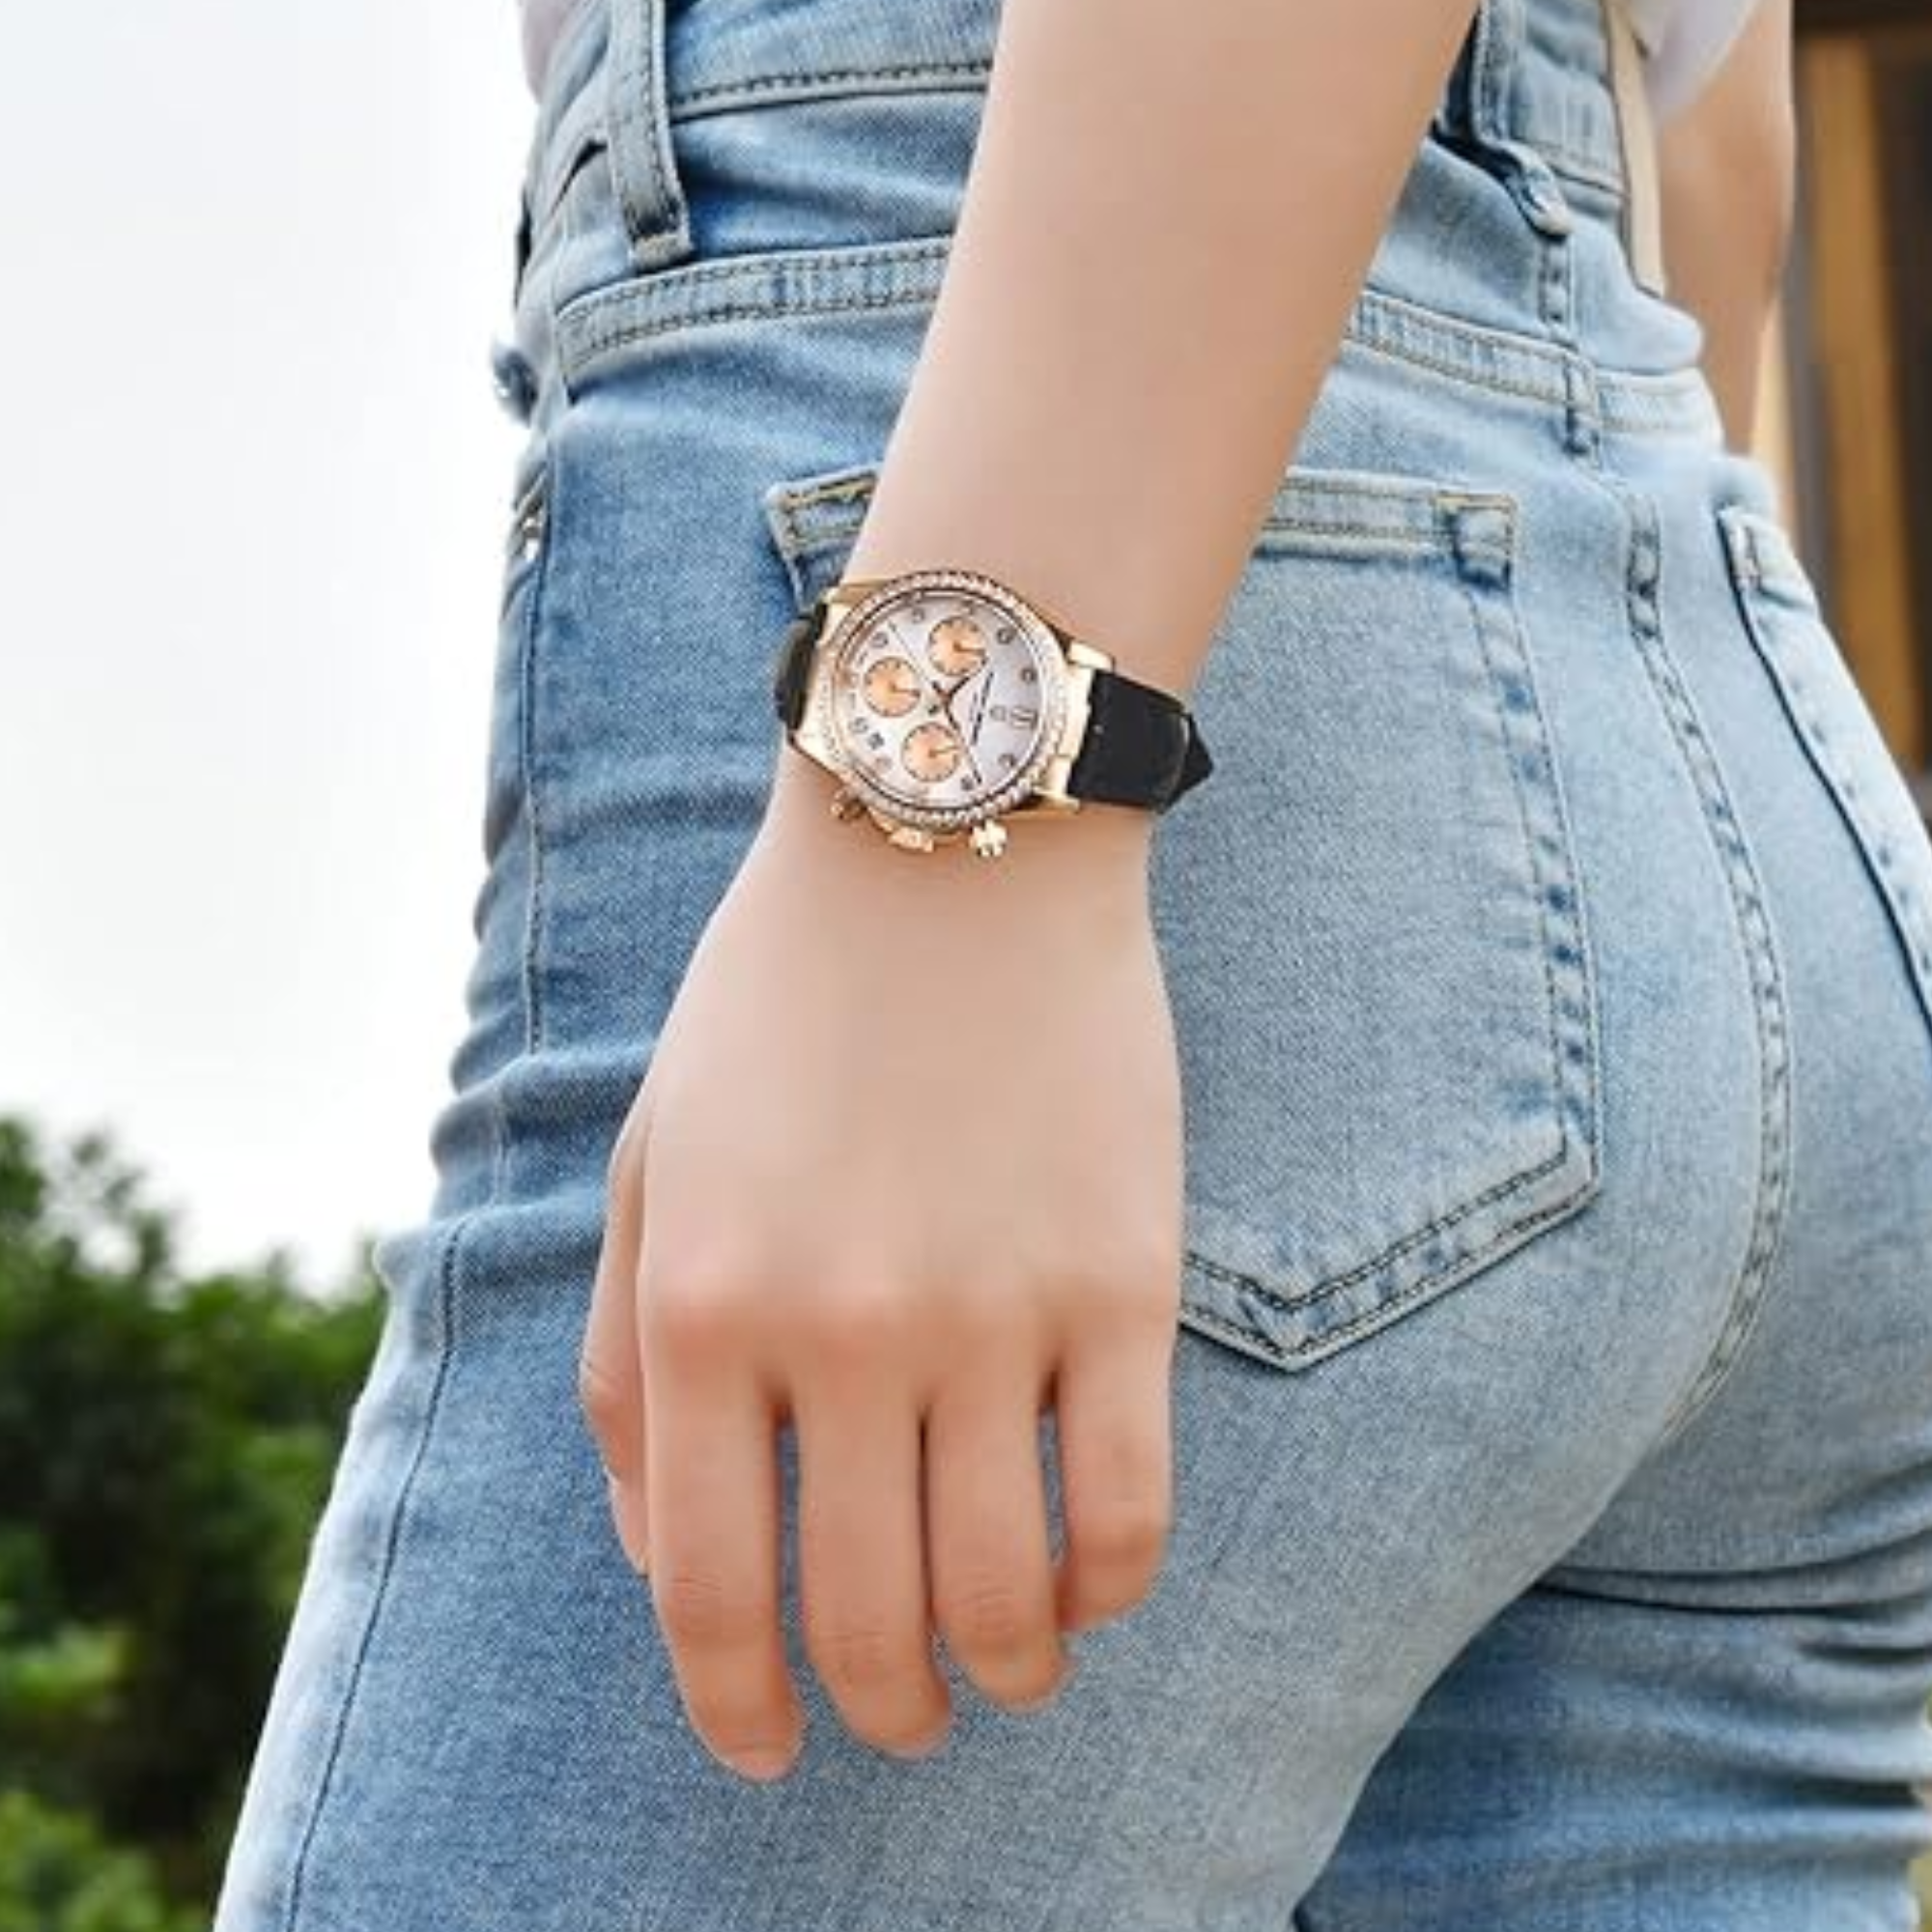 Pagani Design PD1730 Chronograph Date Quartz women's Watch  - Gold Dial with Black Strap